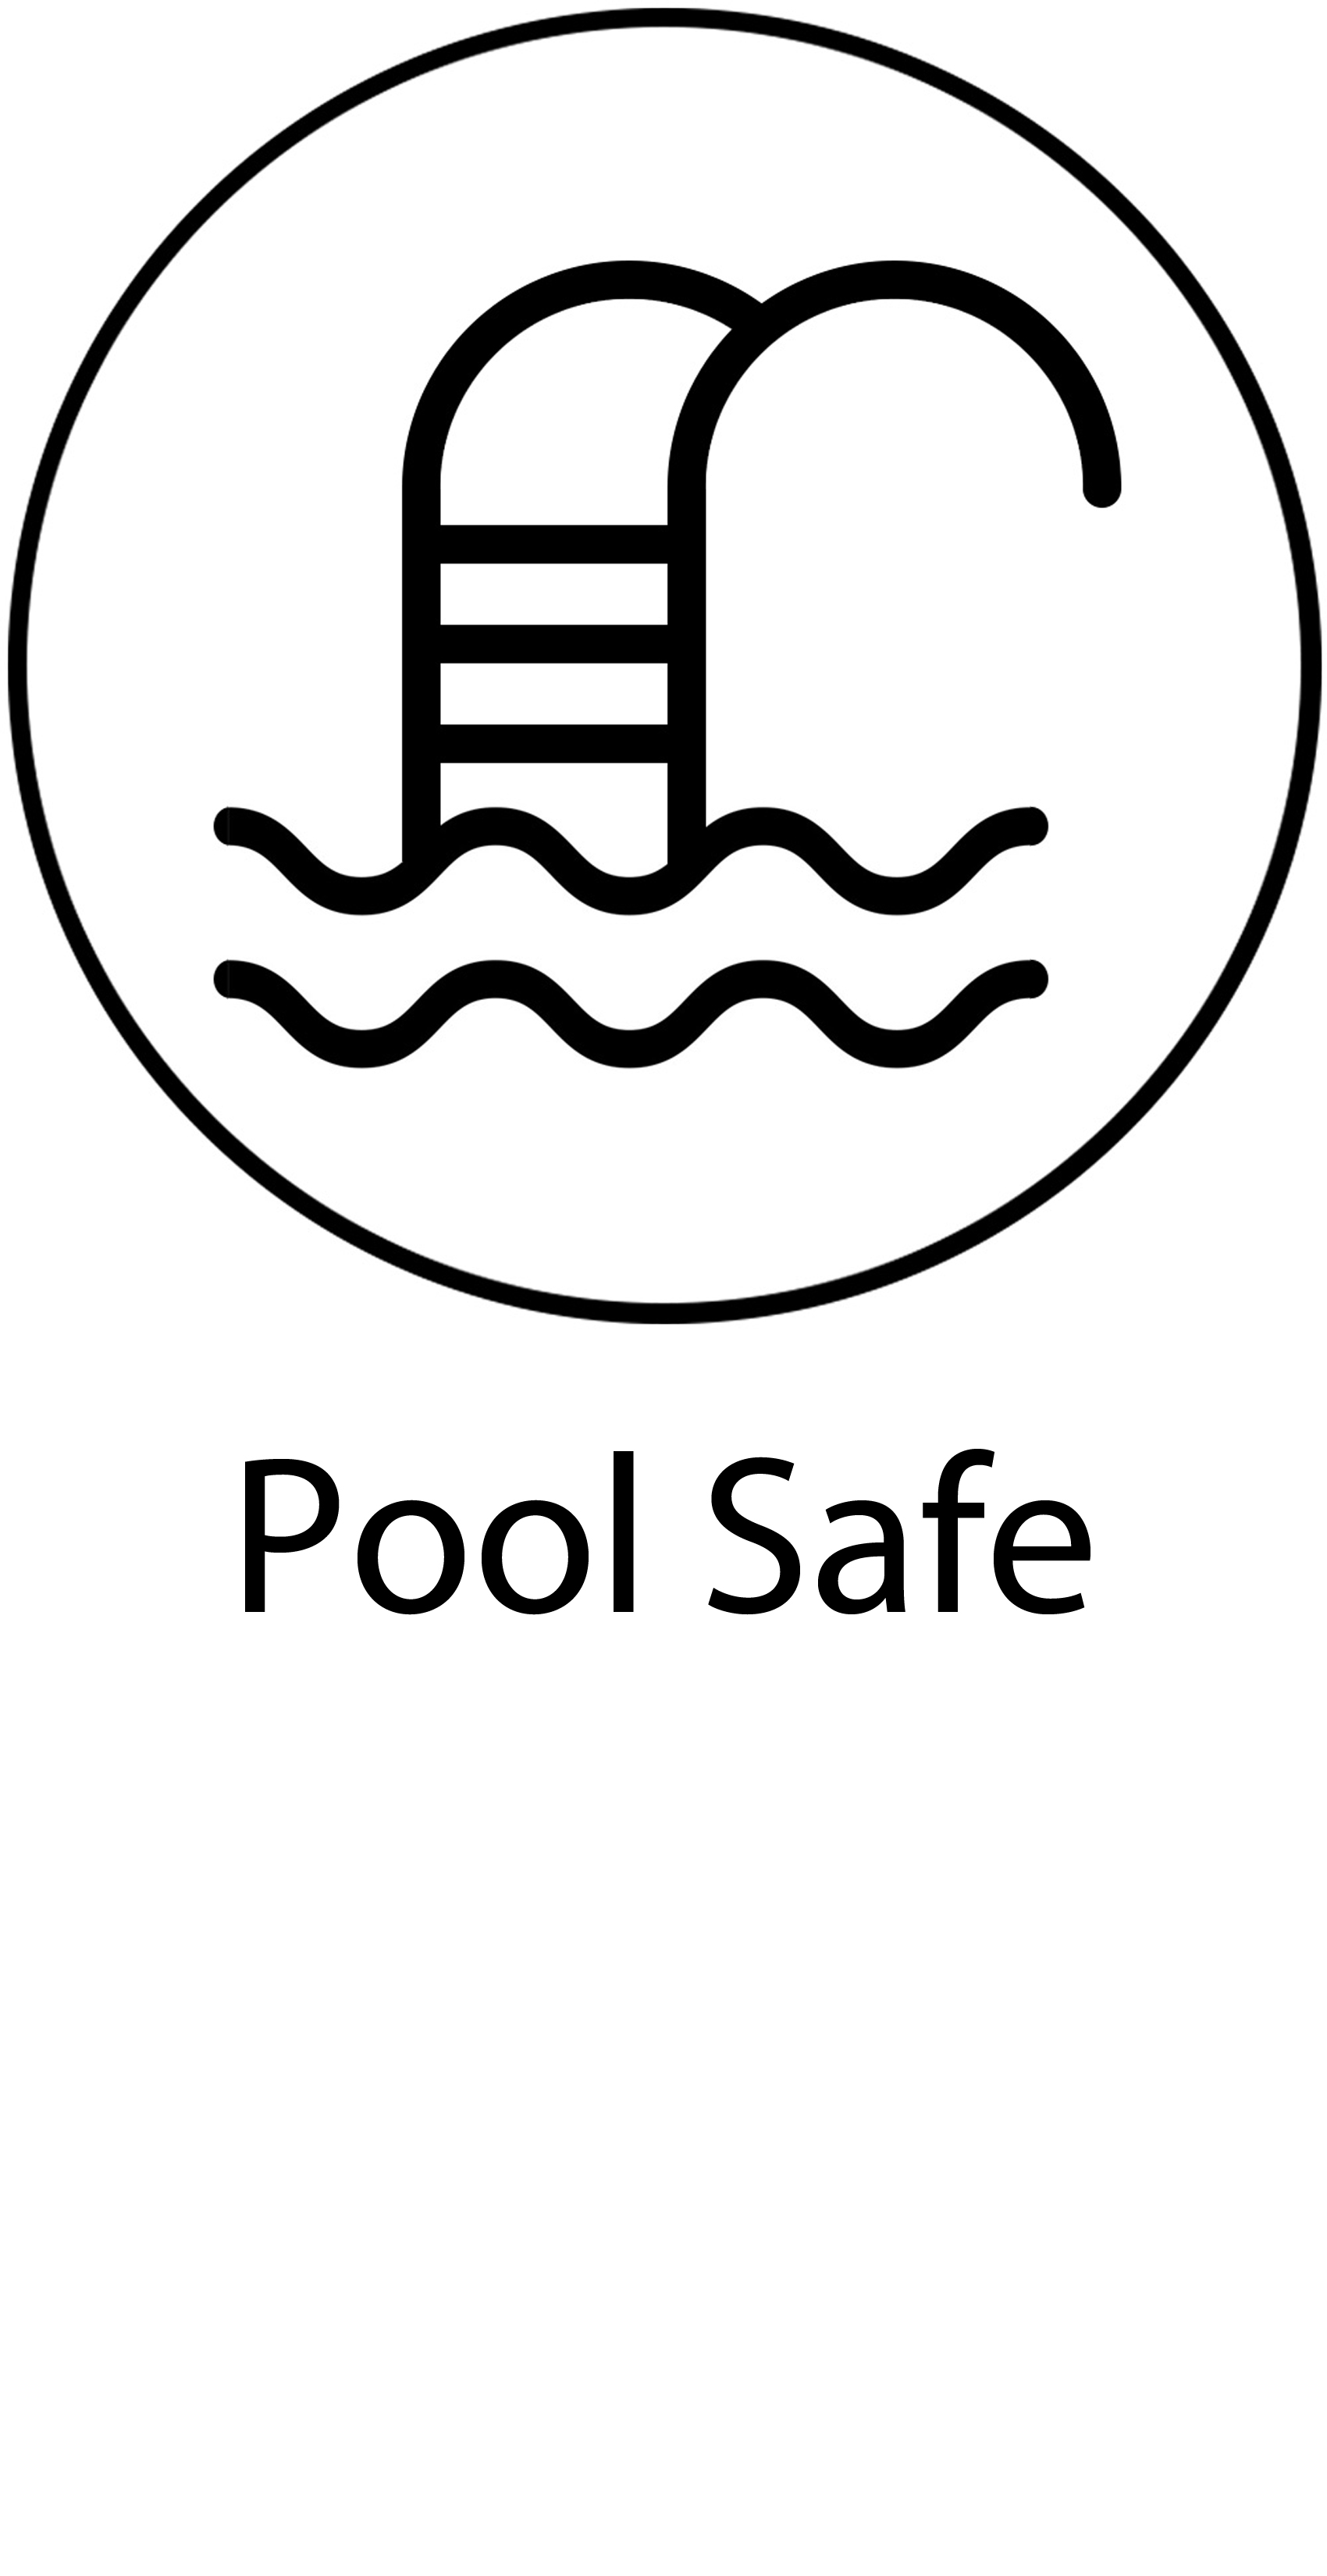 Pool Safe.jpg